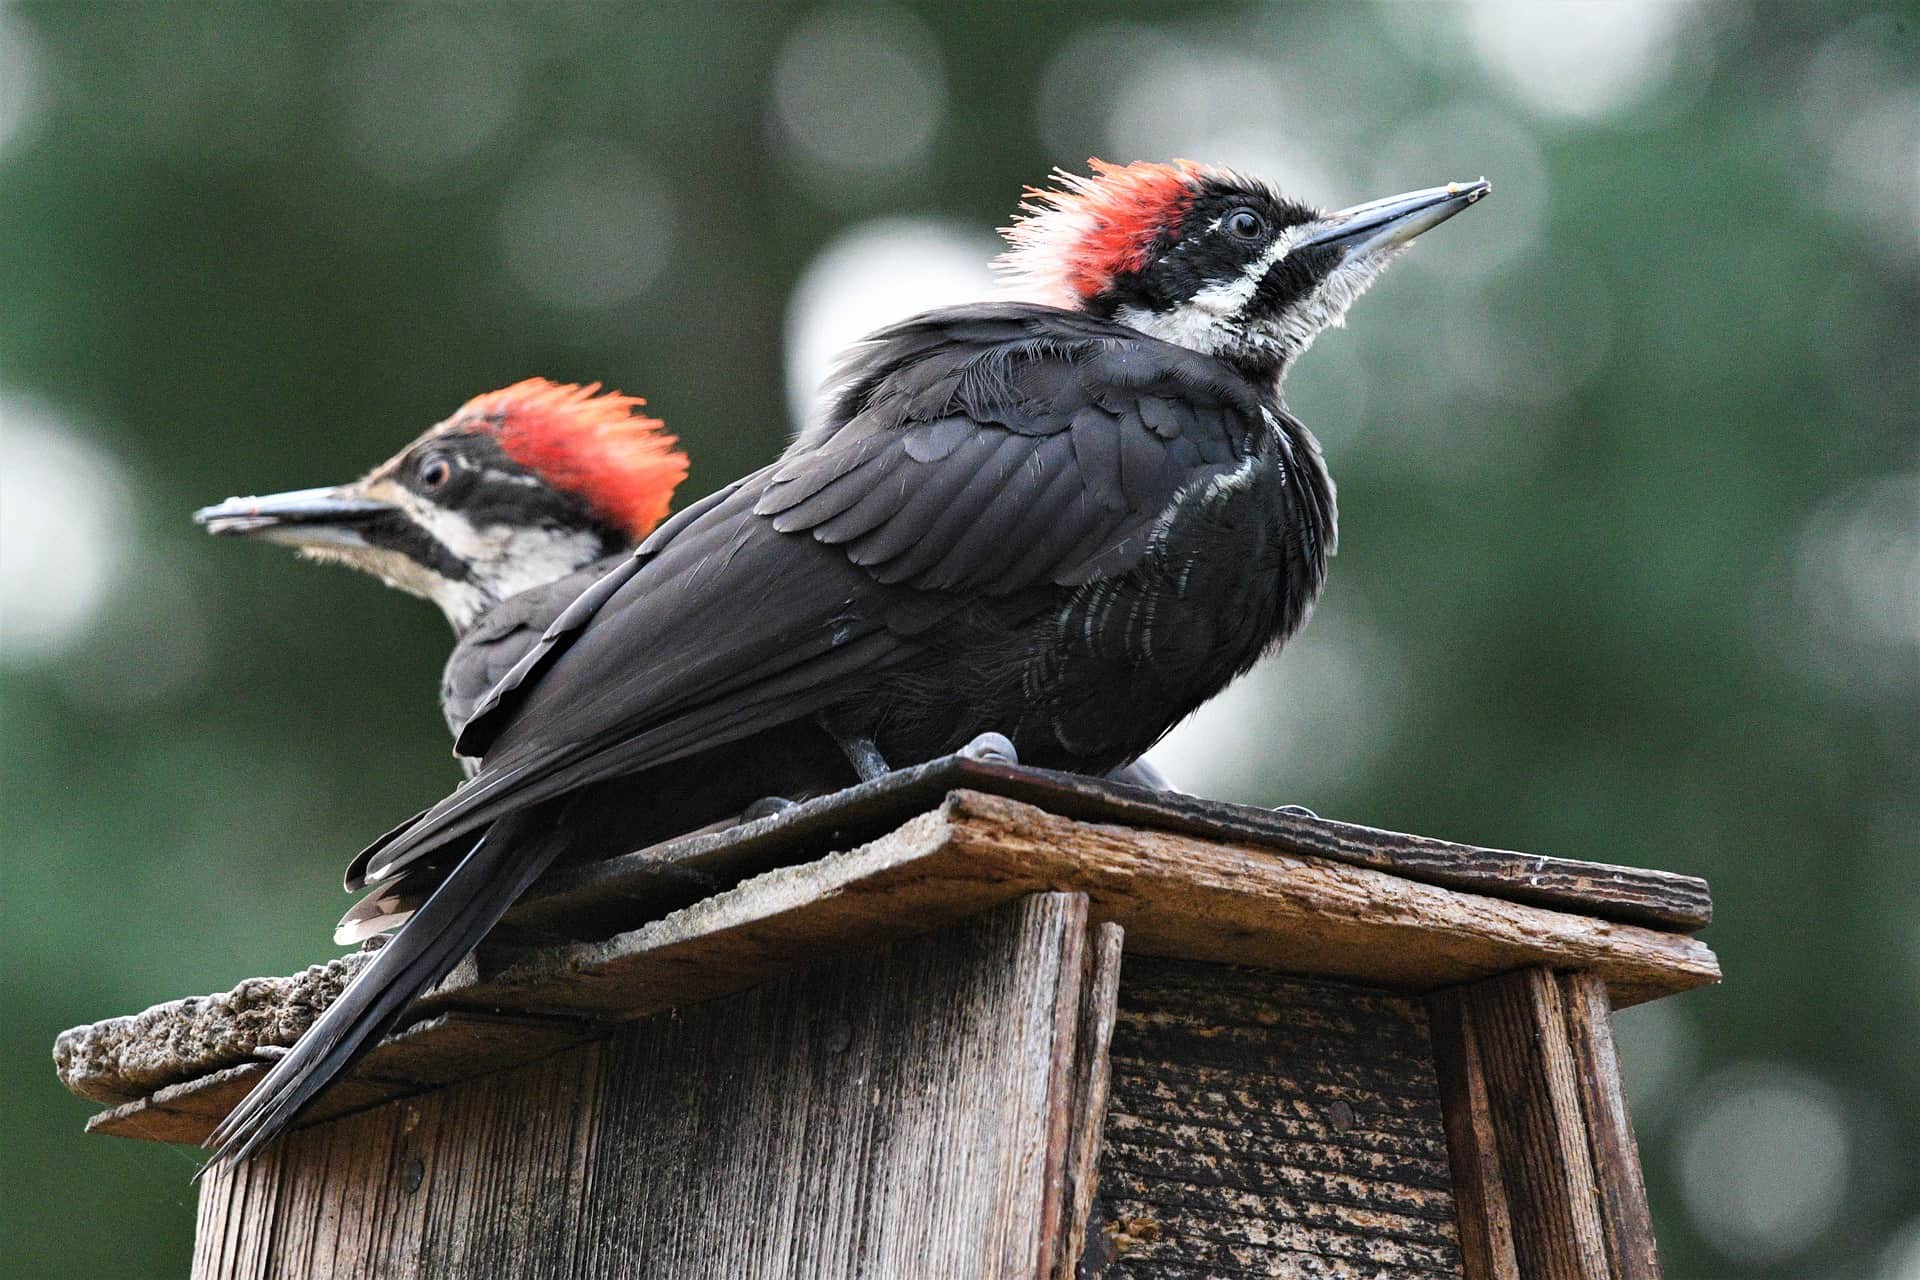 pileated woodpecker pair on a birdhouse